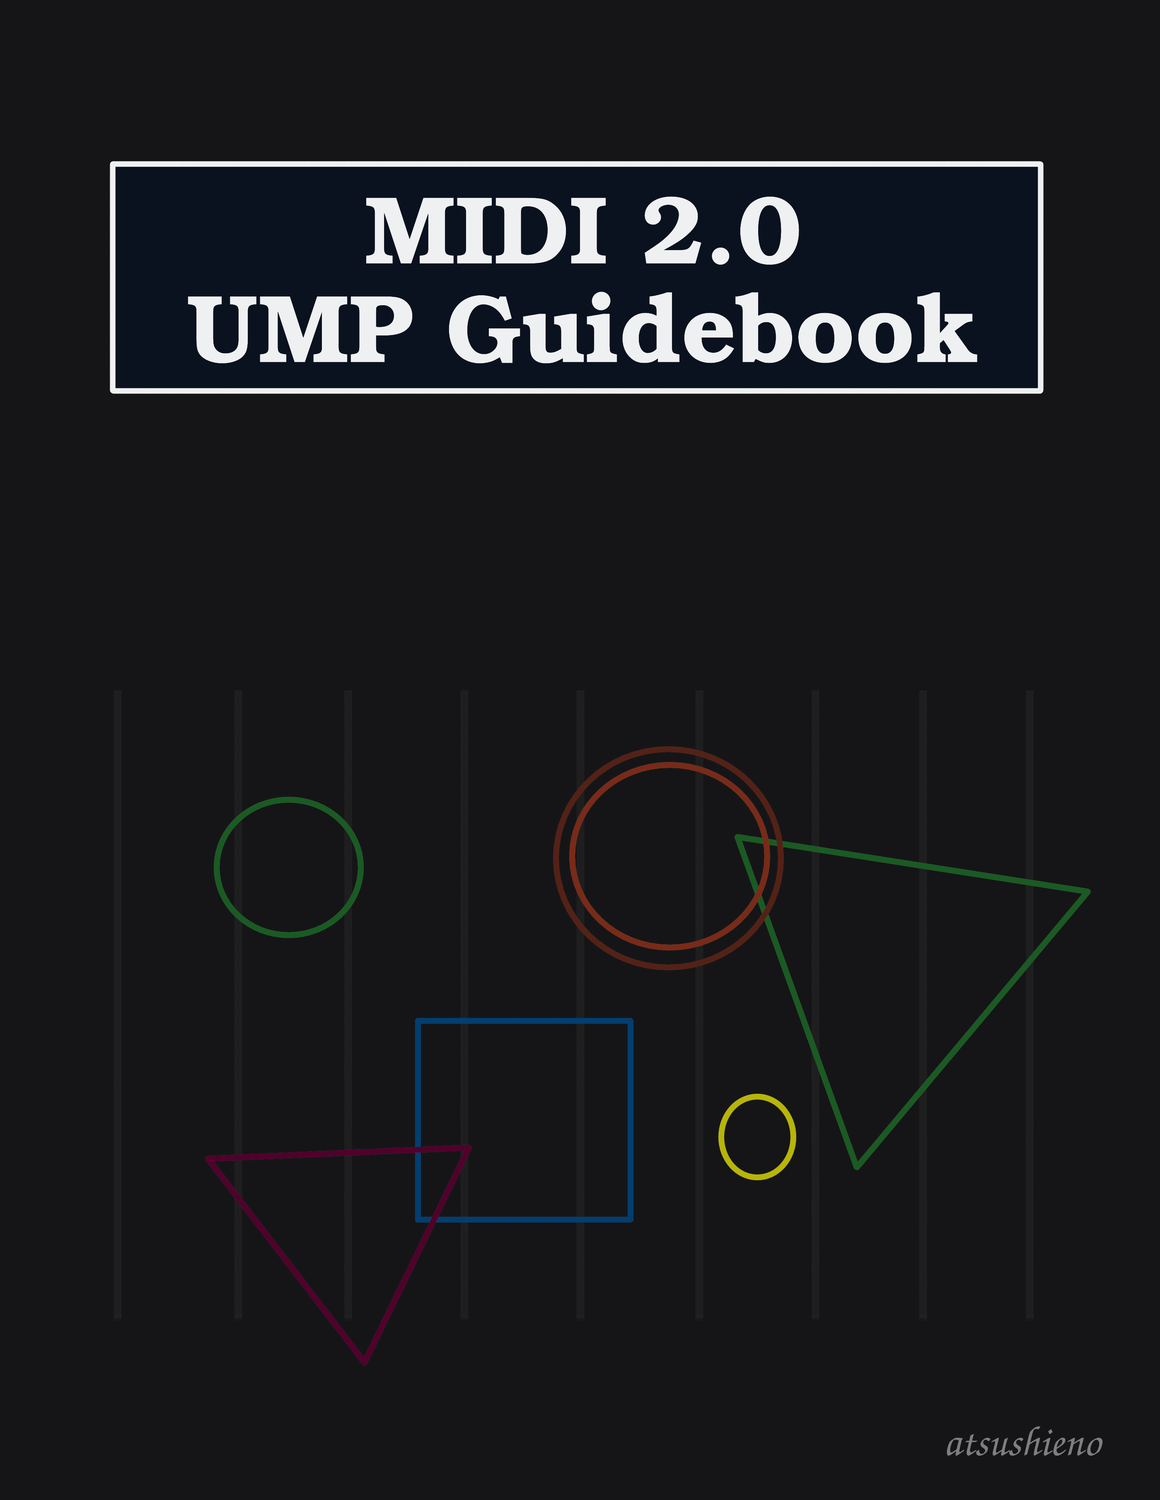 MIDI 2.0 UMPガイドブック